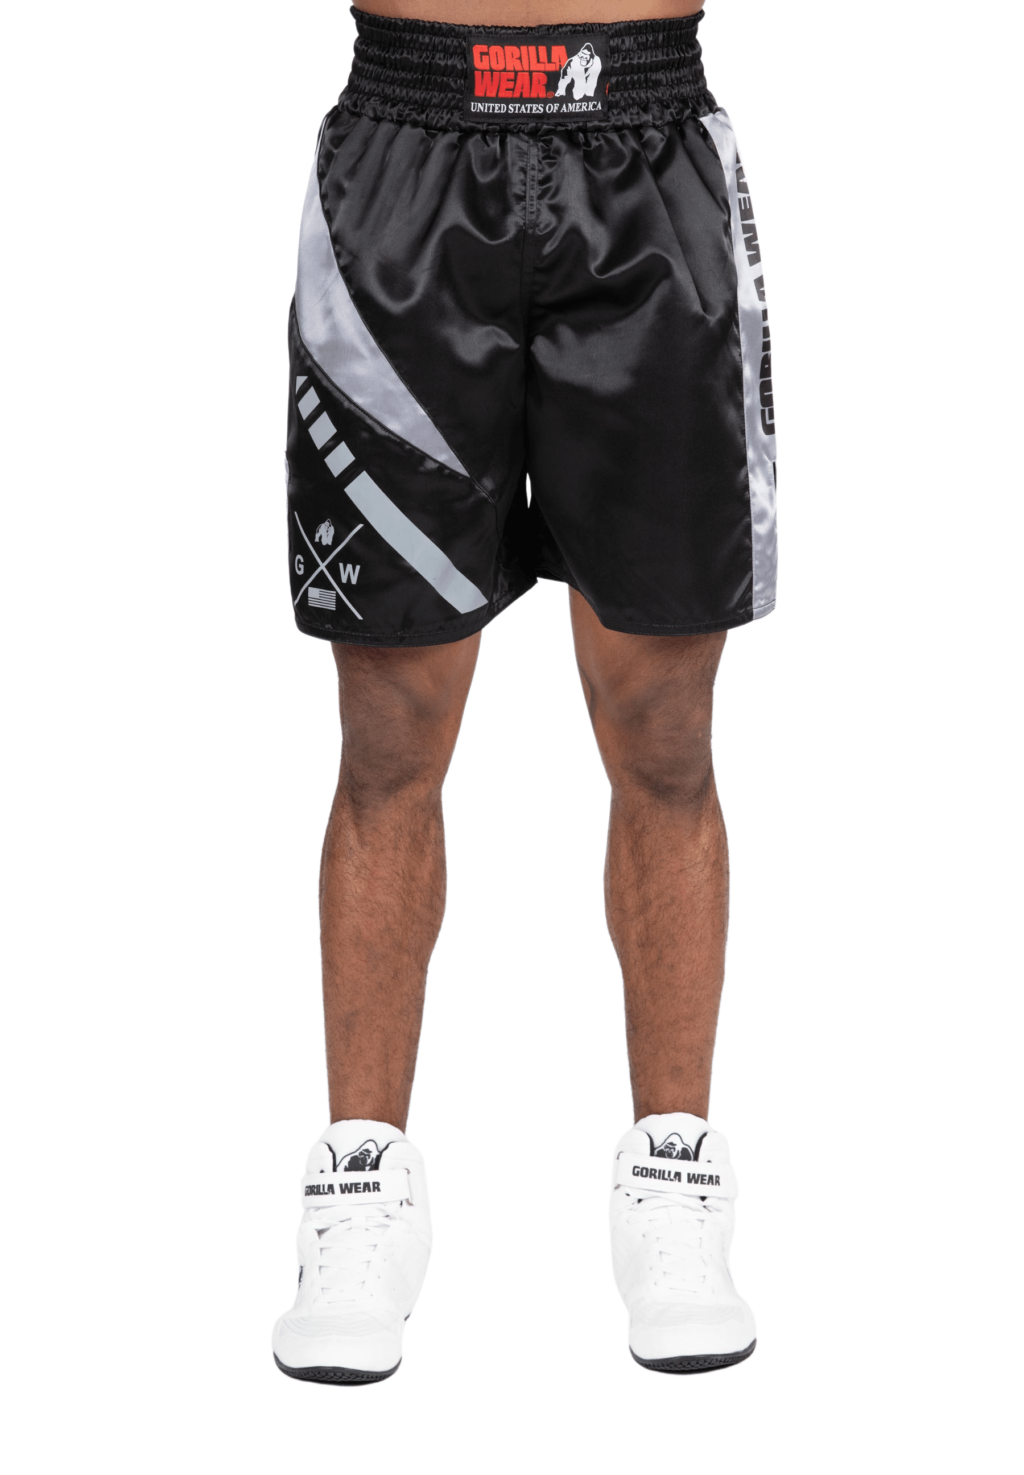 909106908 hornell boxing shorts black gray 13 removebg